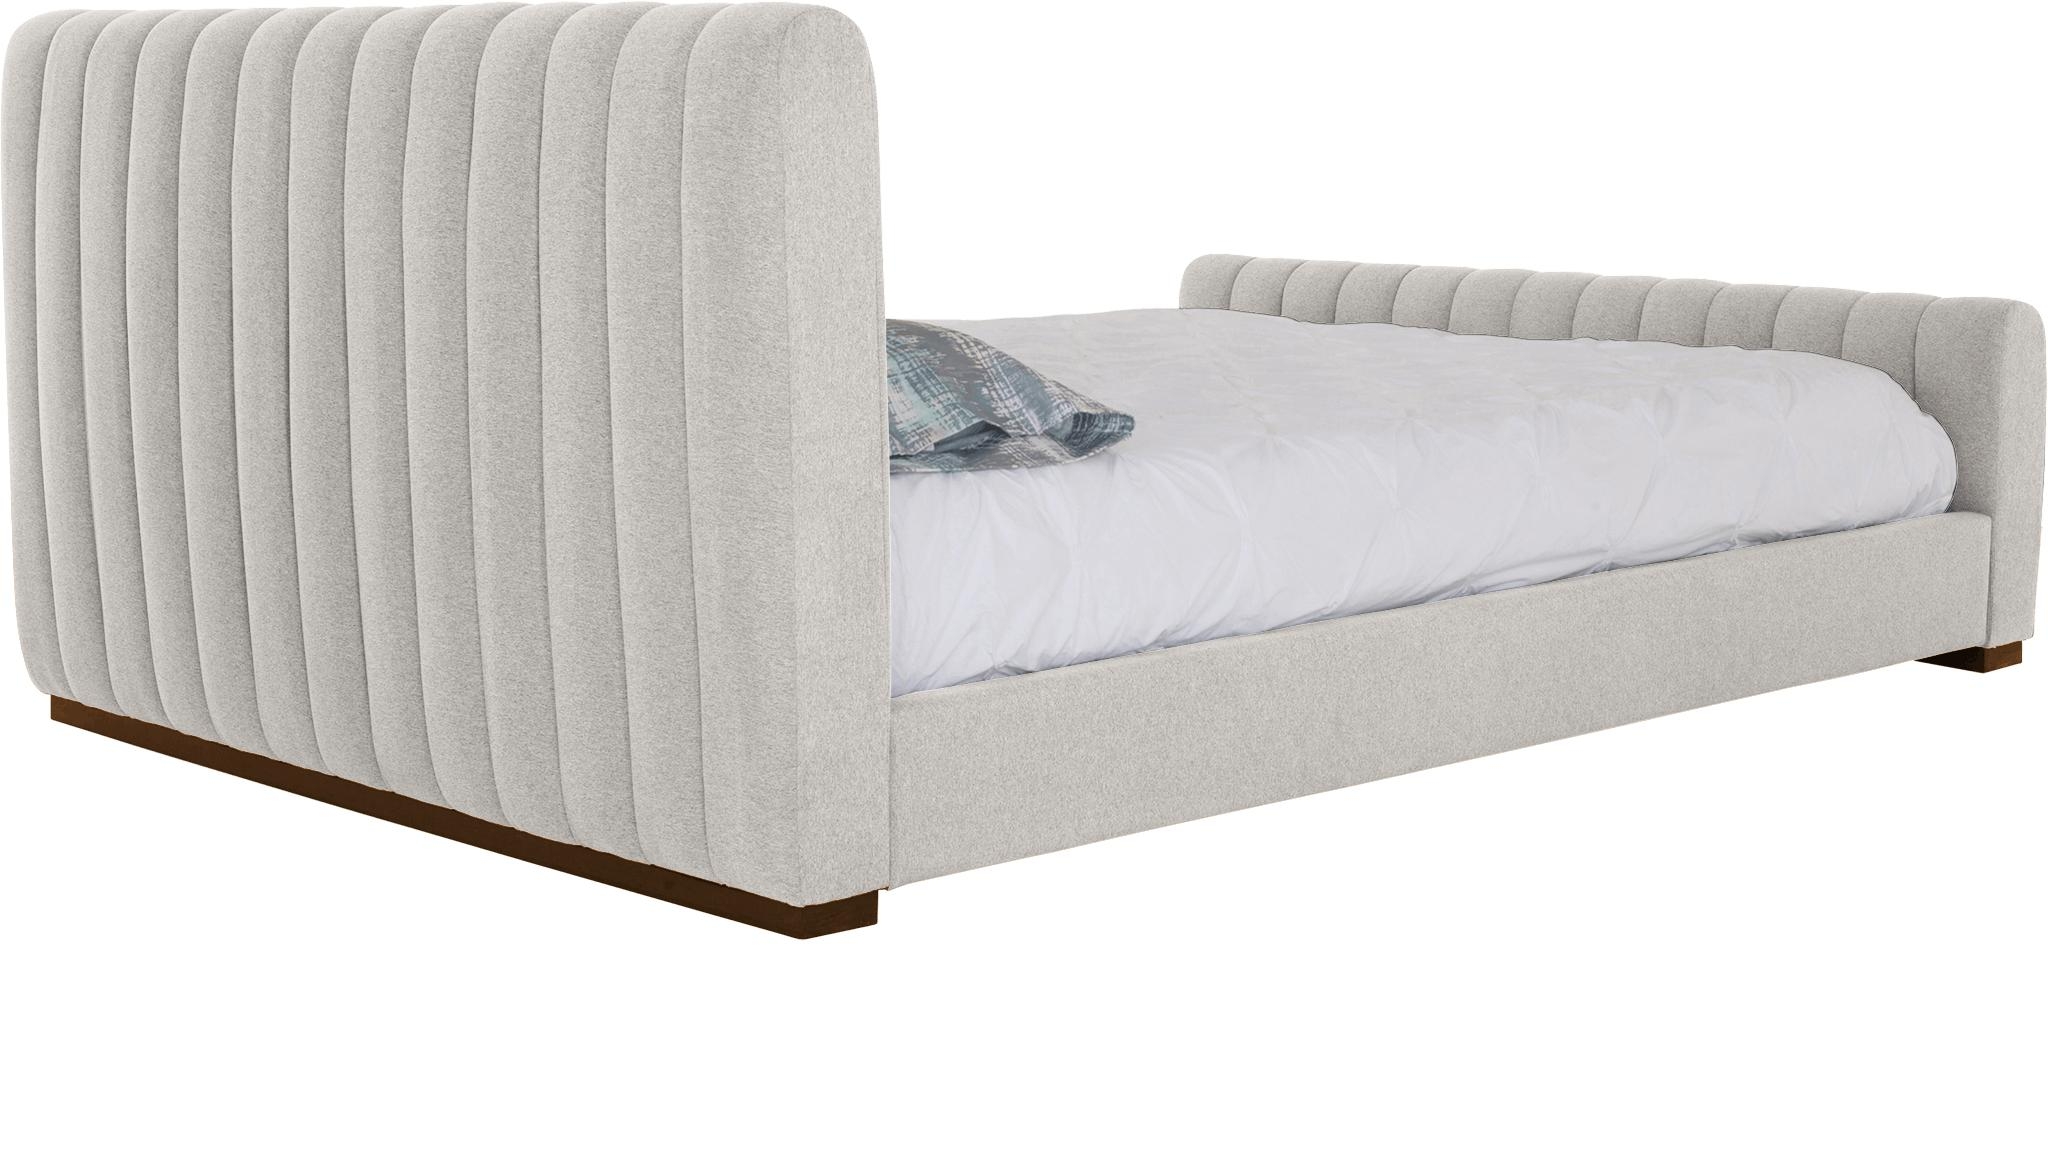 Beige/White Camille Mid Century Modern Bed - Merit Dove - Mocha - Queen - Image 3